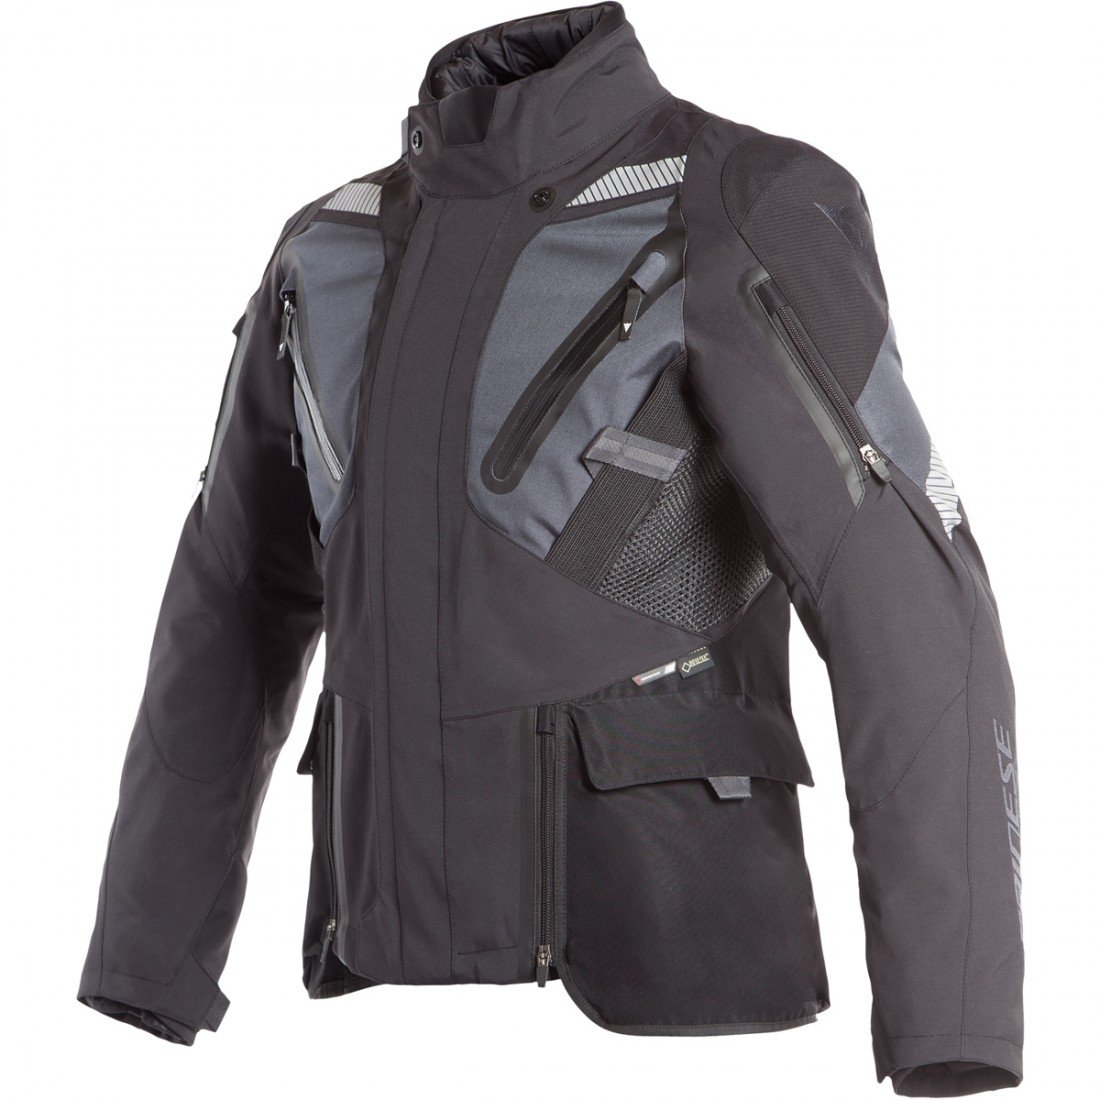 Image of Dainese Gran Turismo Gore-Tex Jacket Black Ebony Size 46 ID 8052644913620